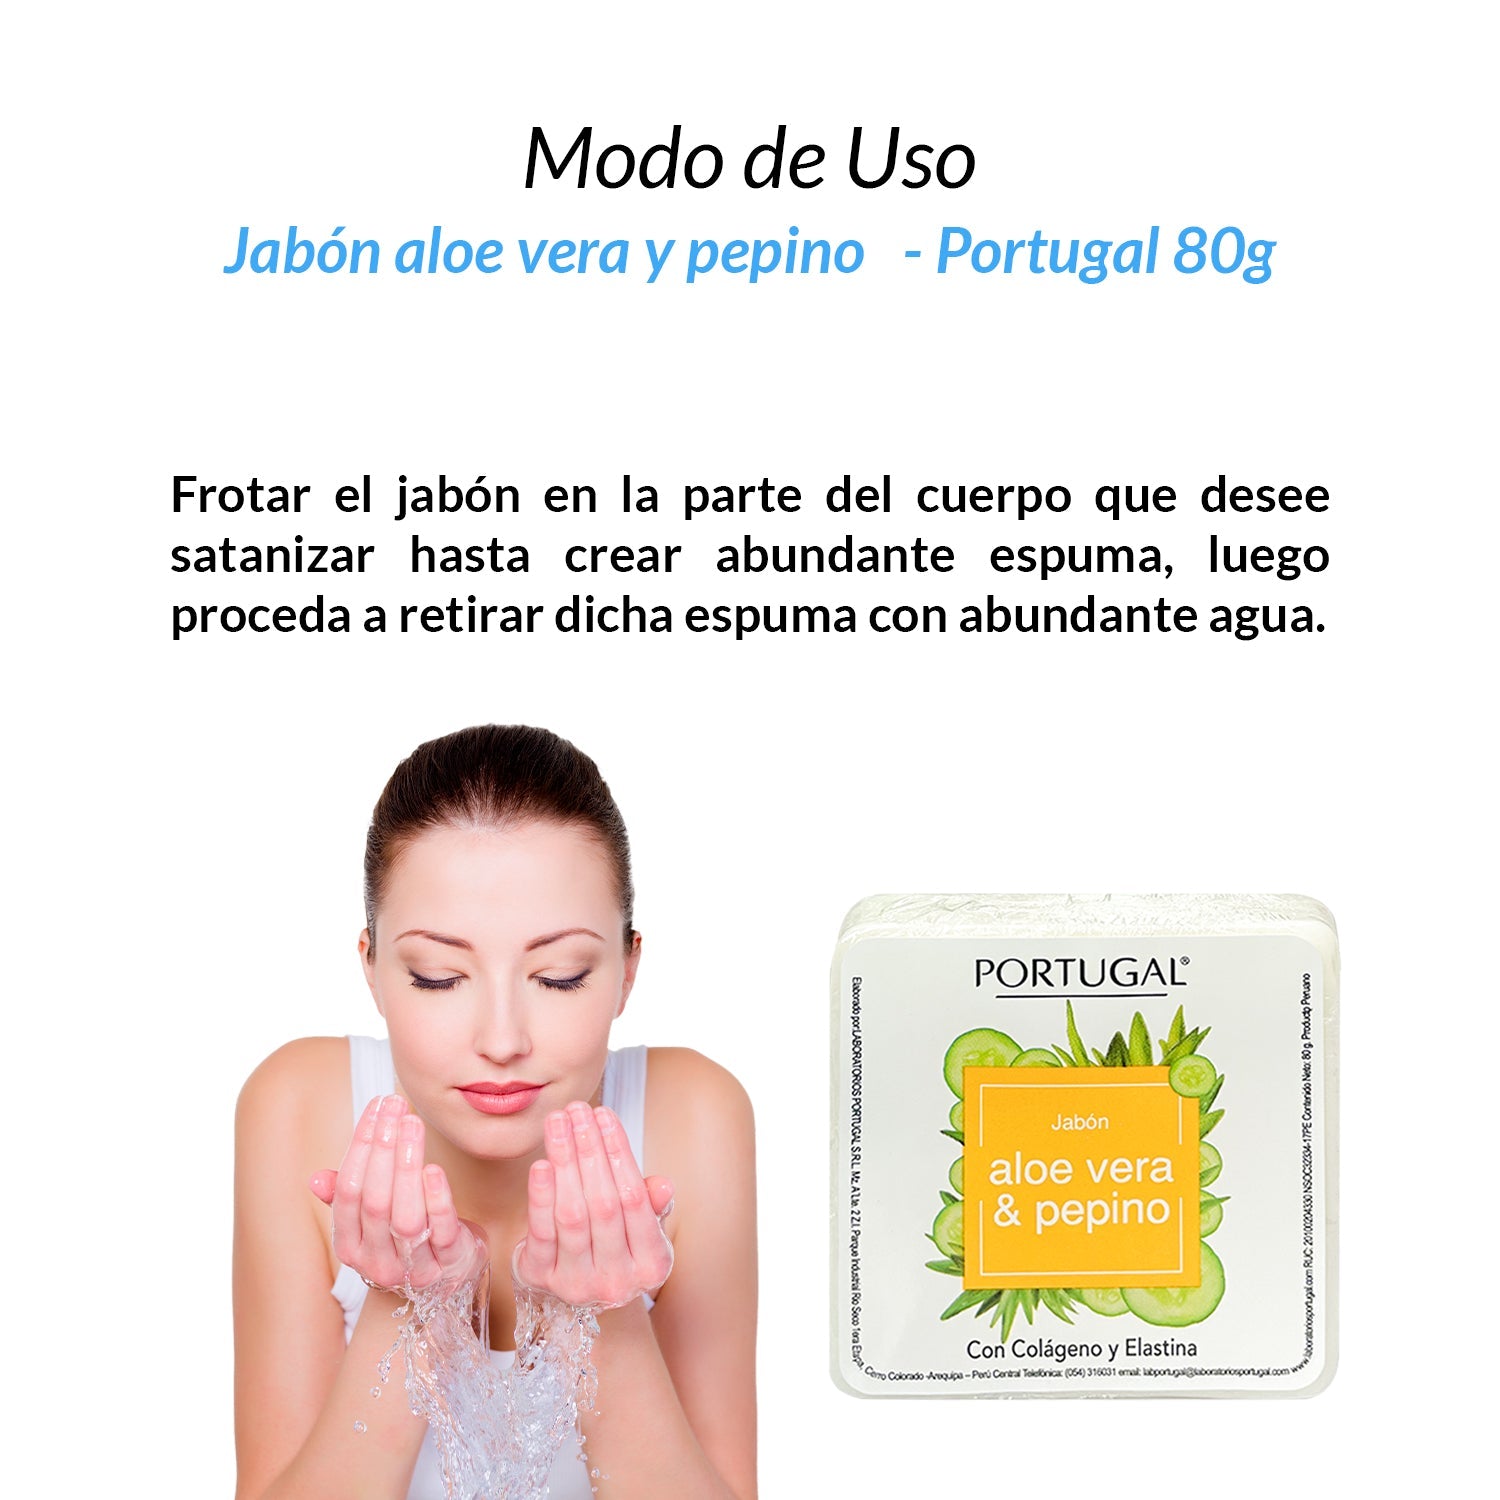 Jabón aloe vera y pepino 80g - Portugal